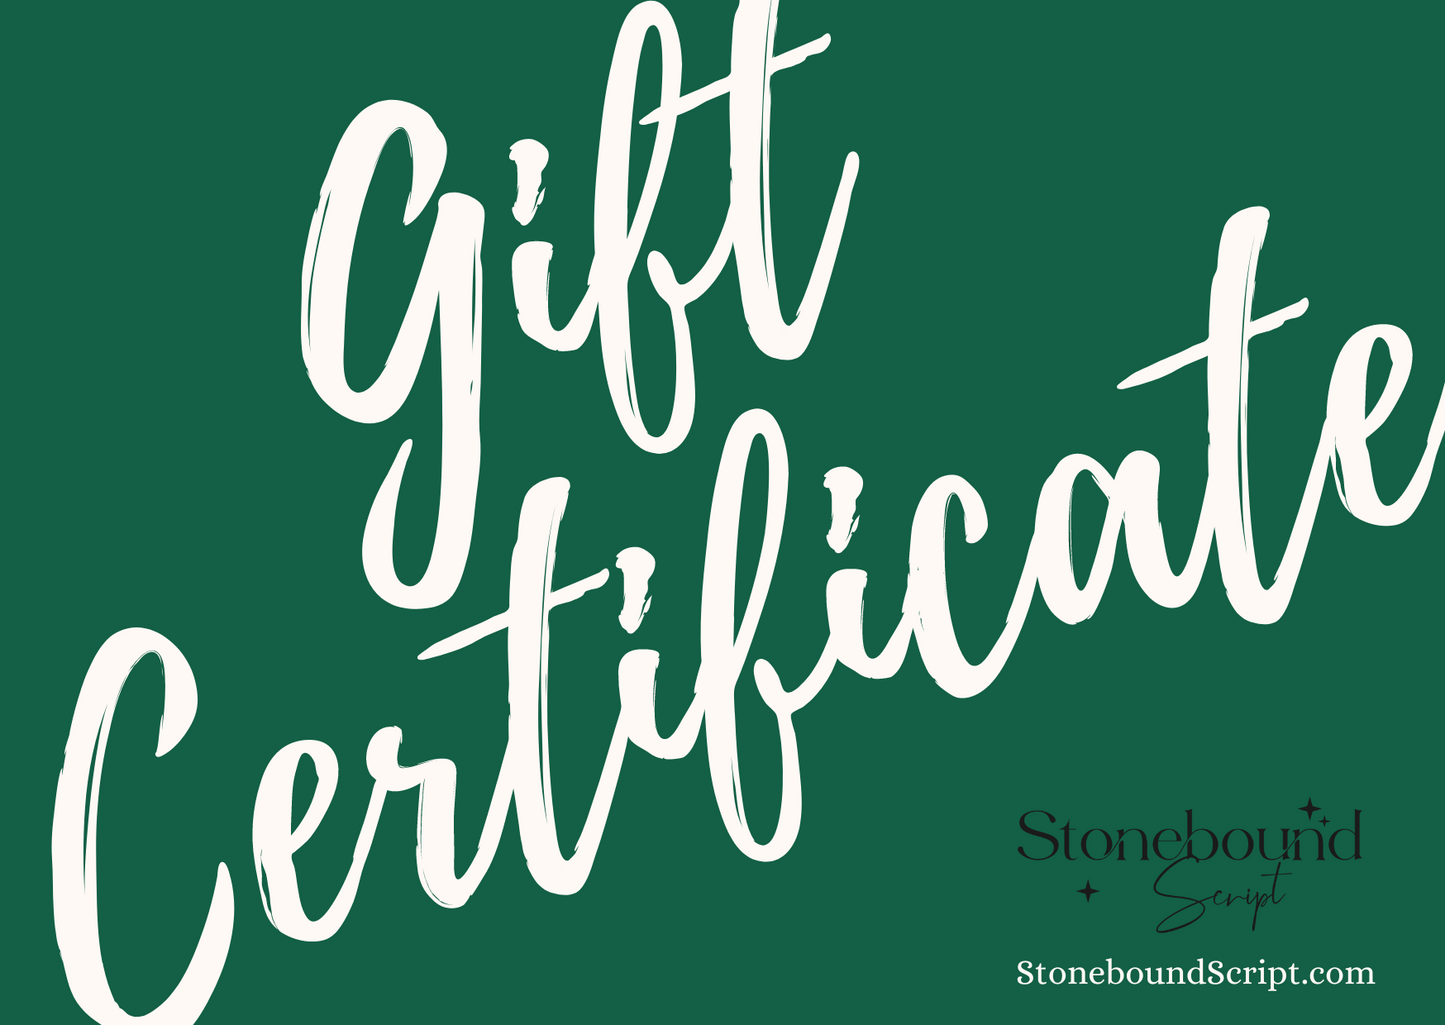 Stonebound Script Gift Card $15-$200 Value